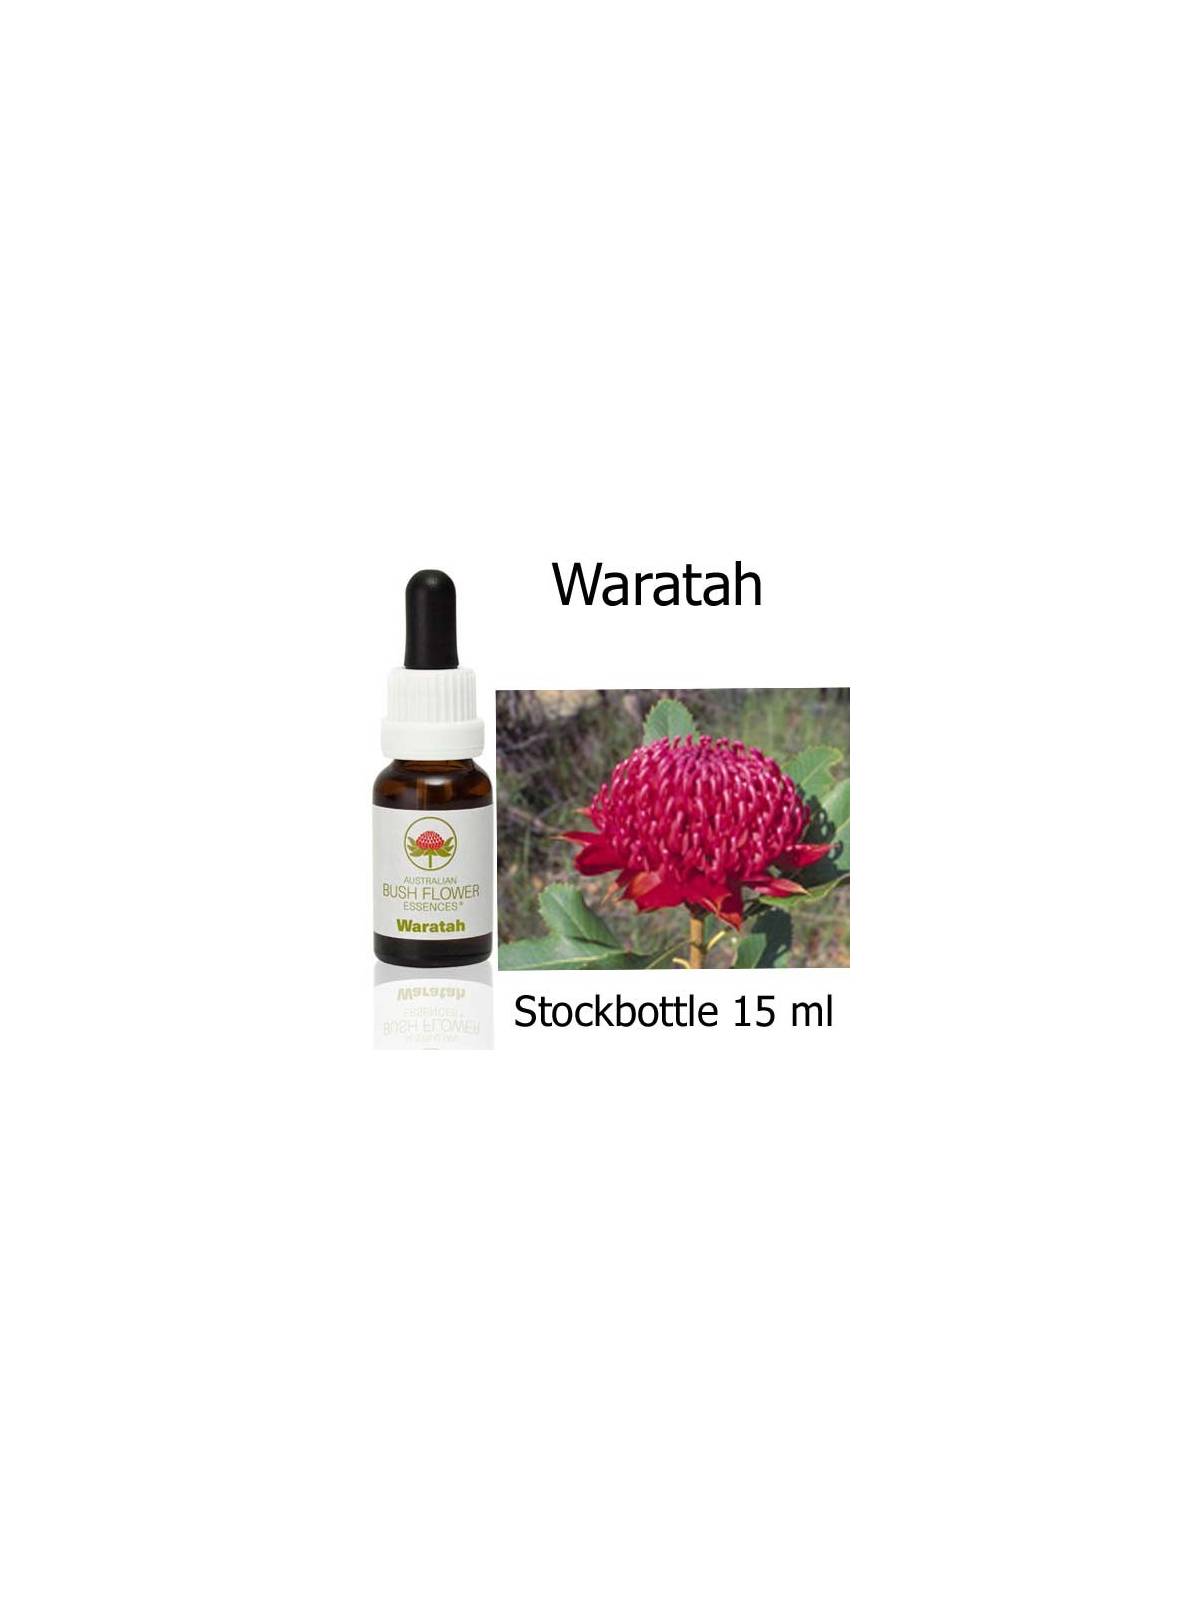 Fiori Australiani Waratah Australian Bush Flower Essences stockbottles